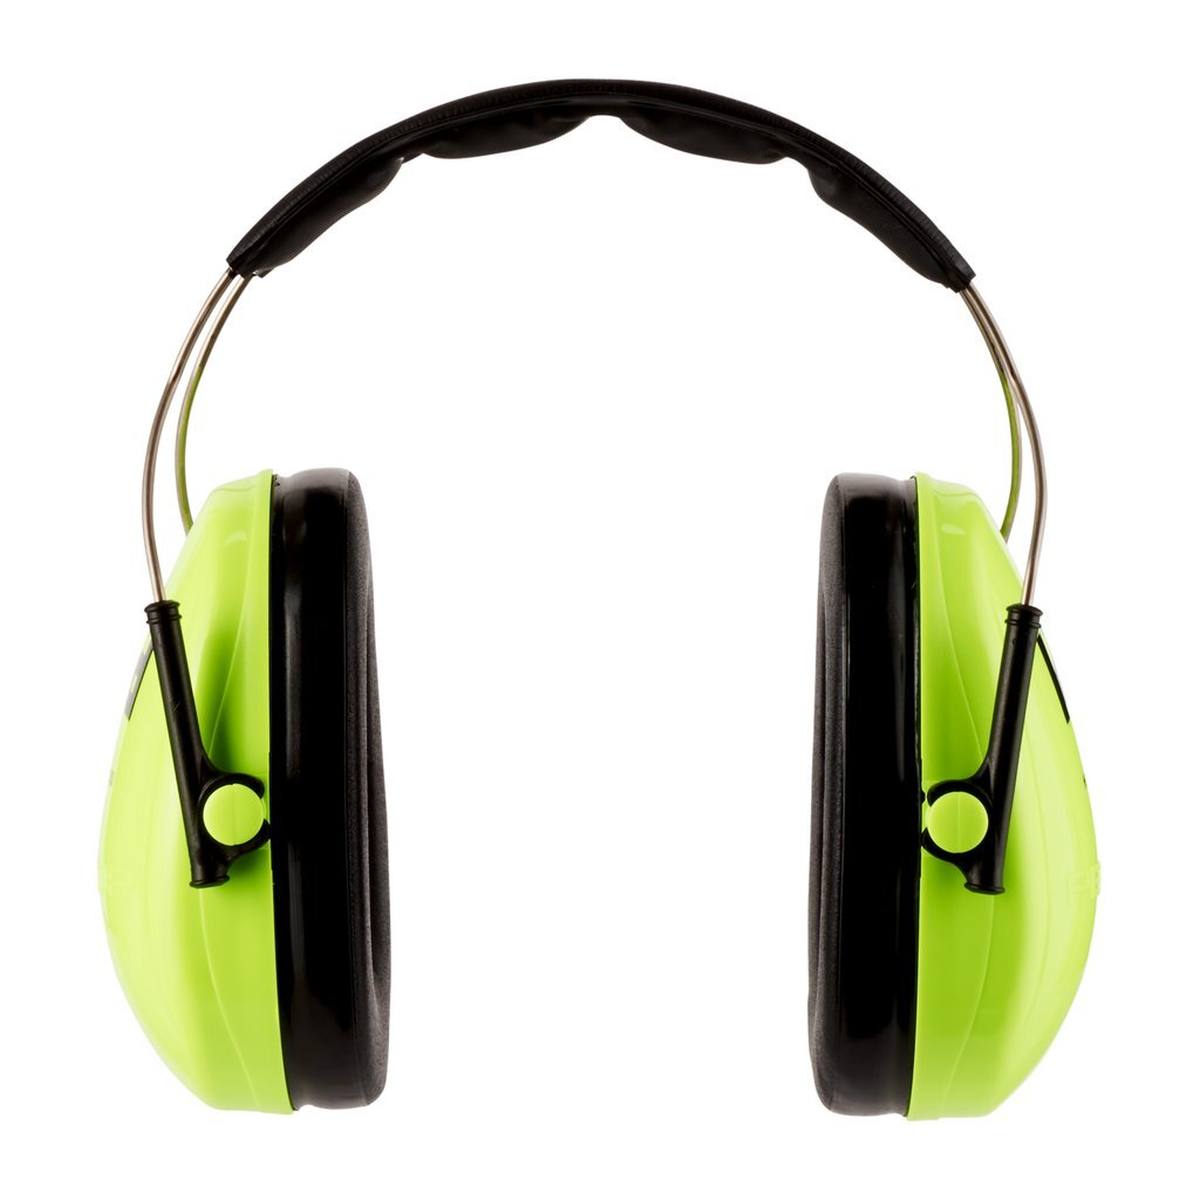 3M PELTOR Earmuffs for children H510AK, neon green (87 to 98 dB)